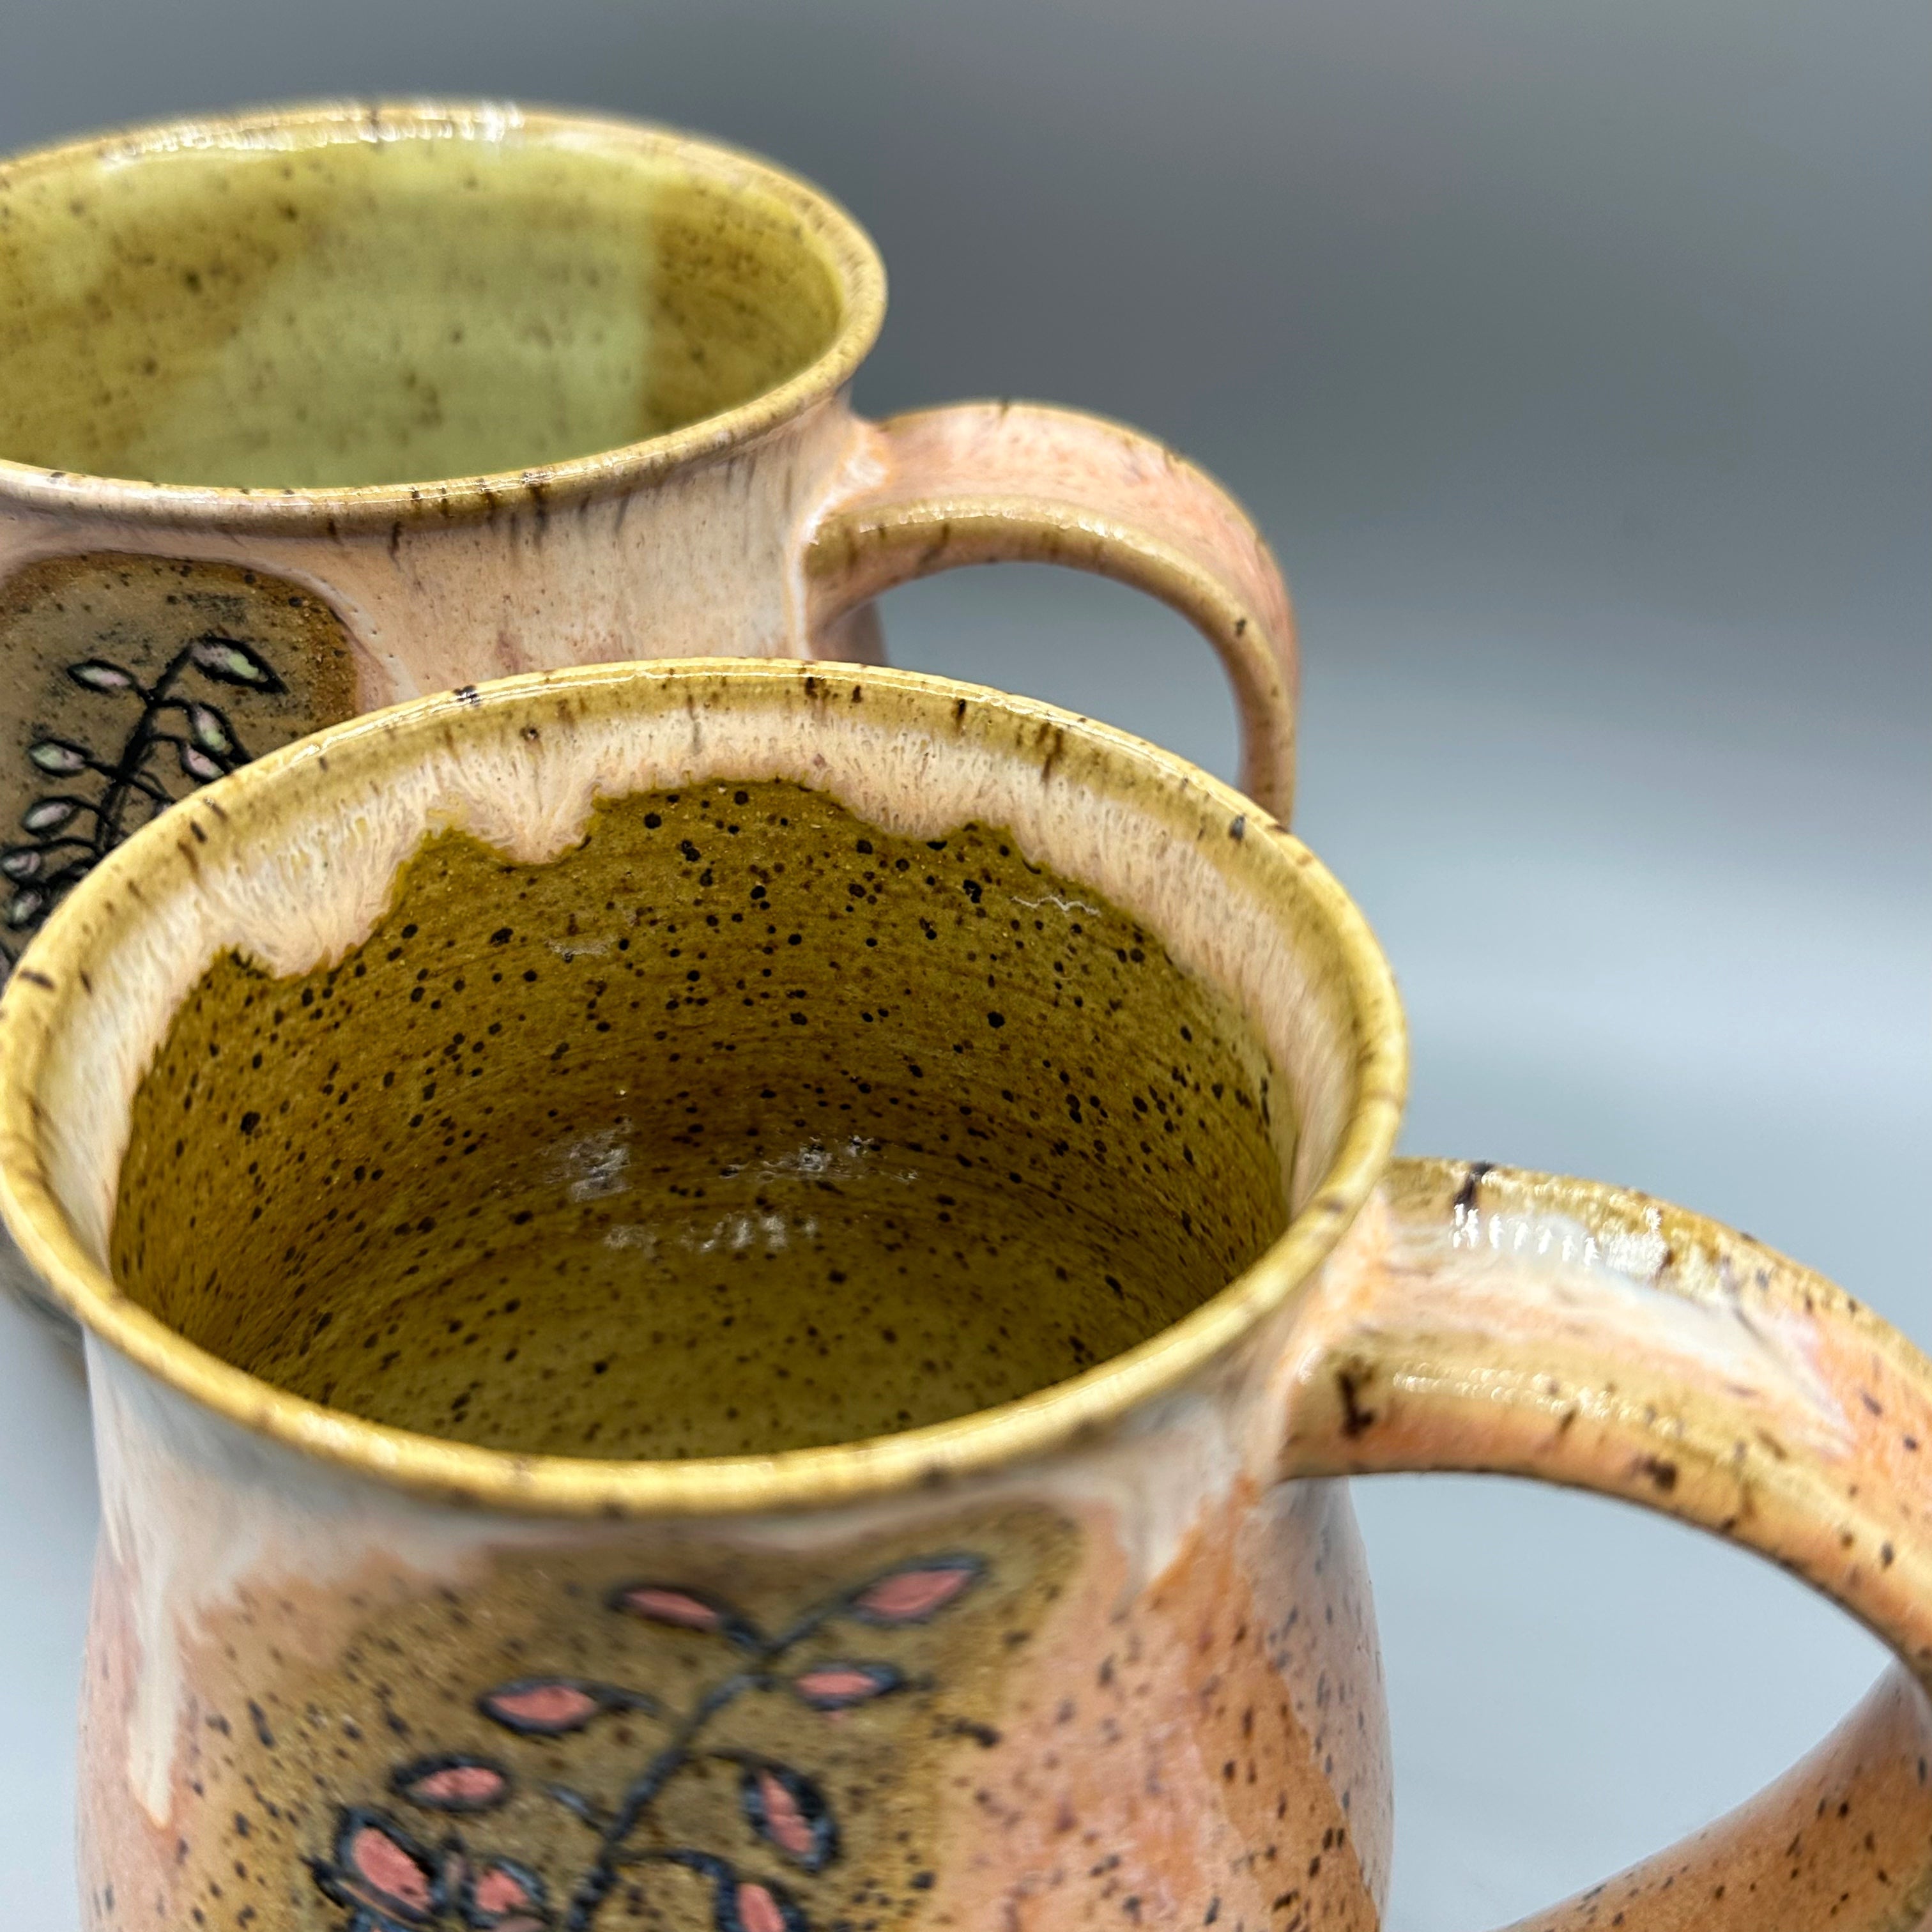 Carved Ceramic Mug | Fireweed